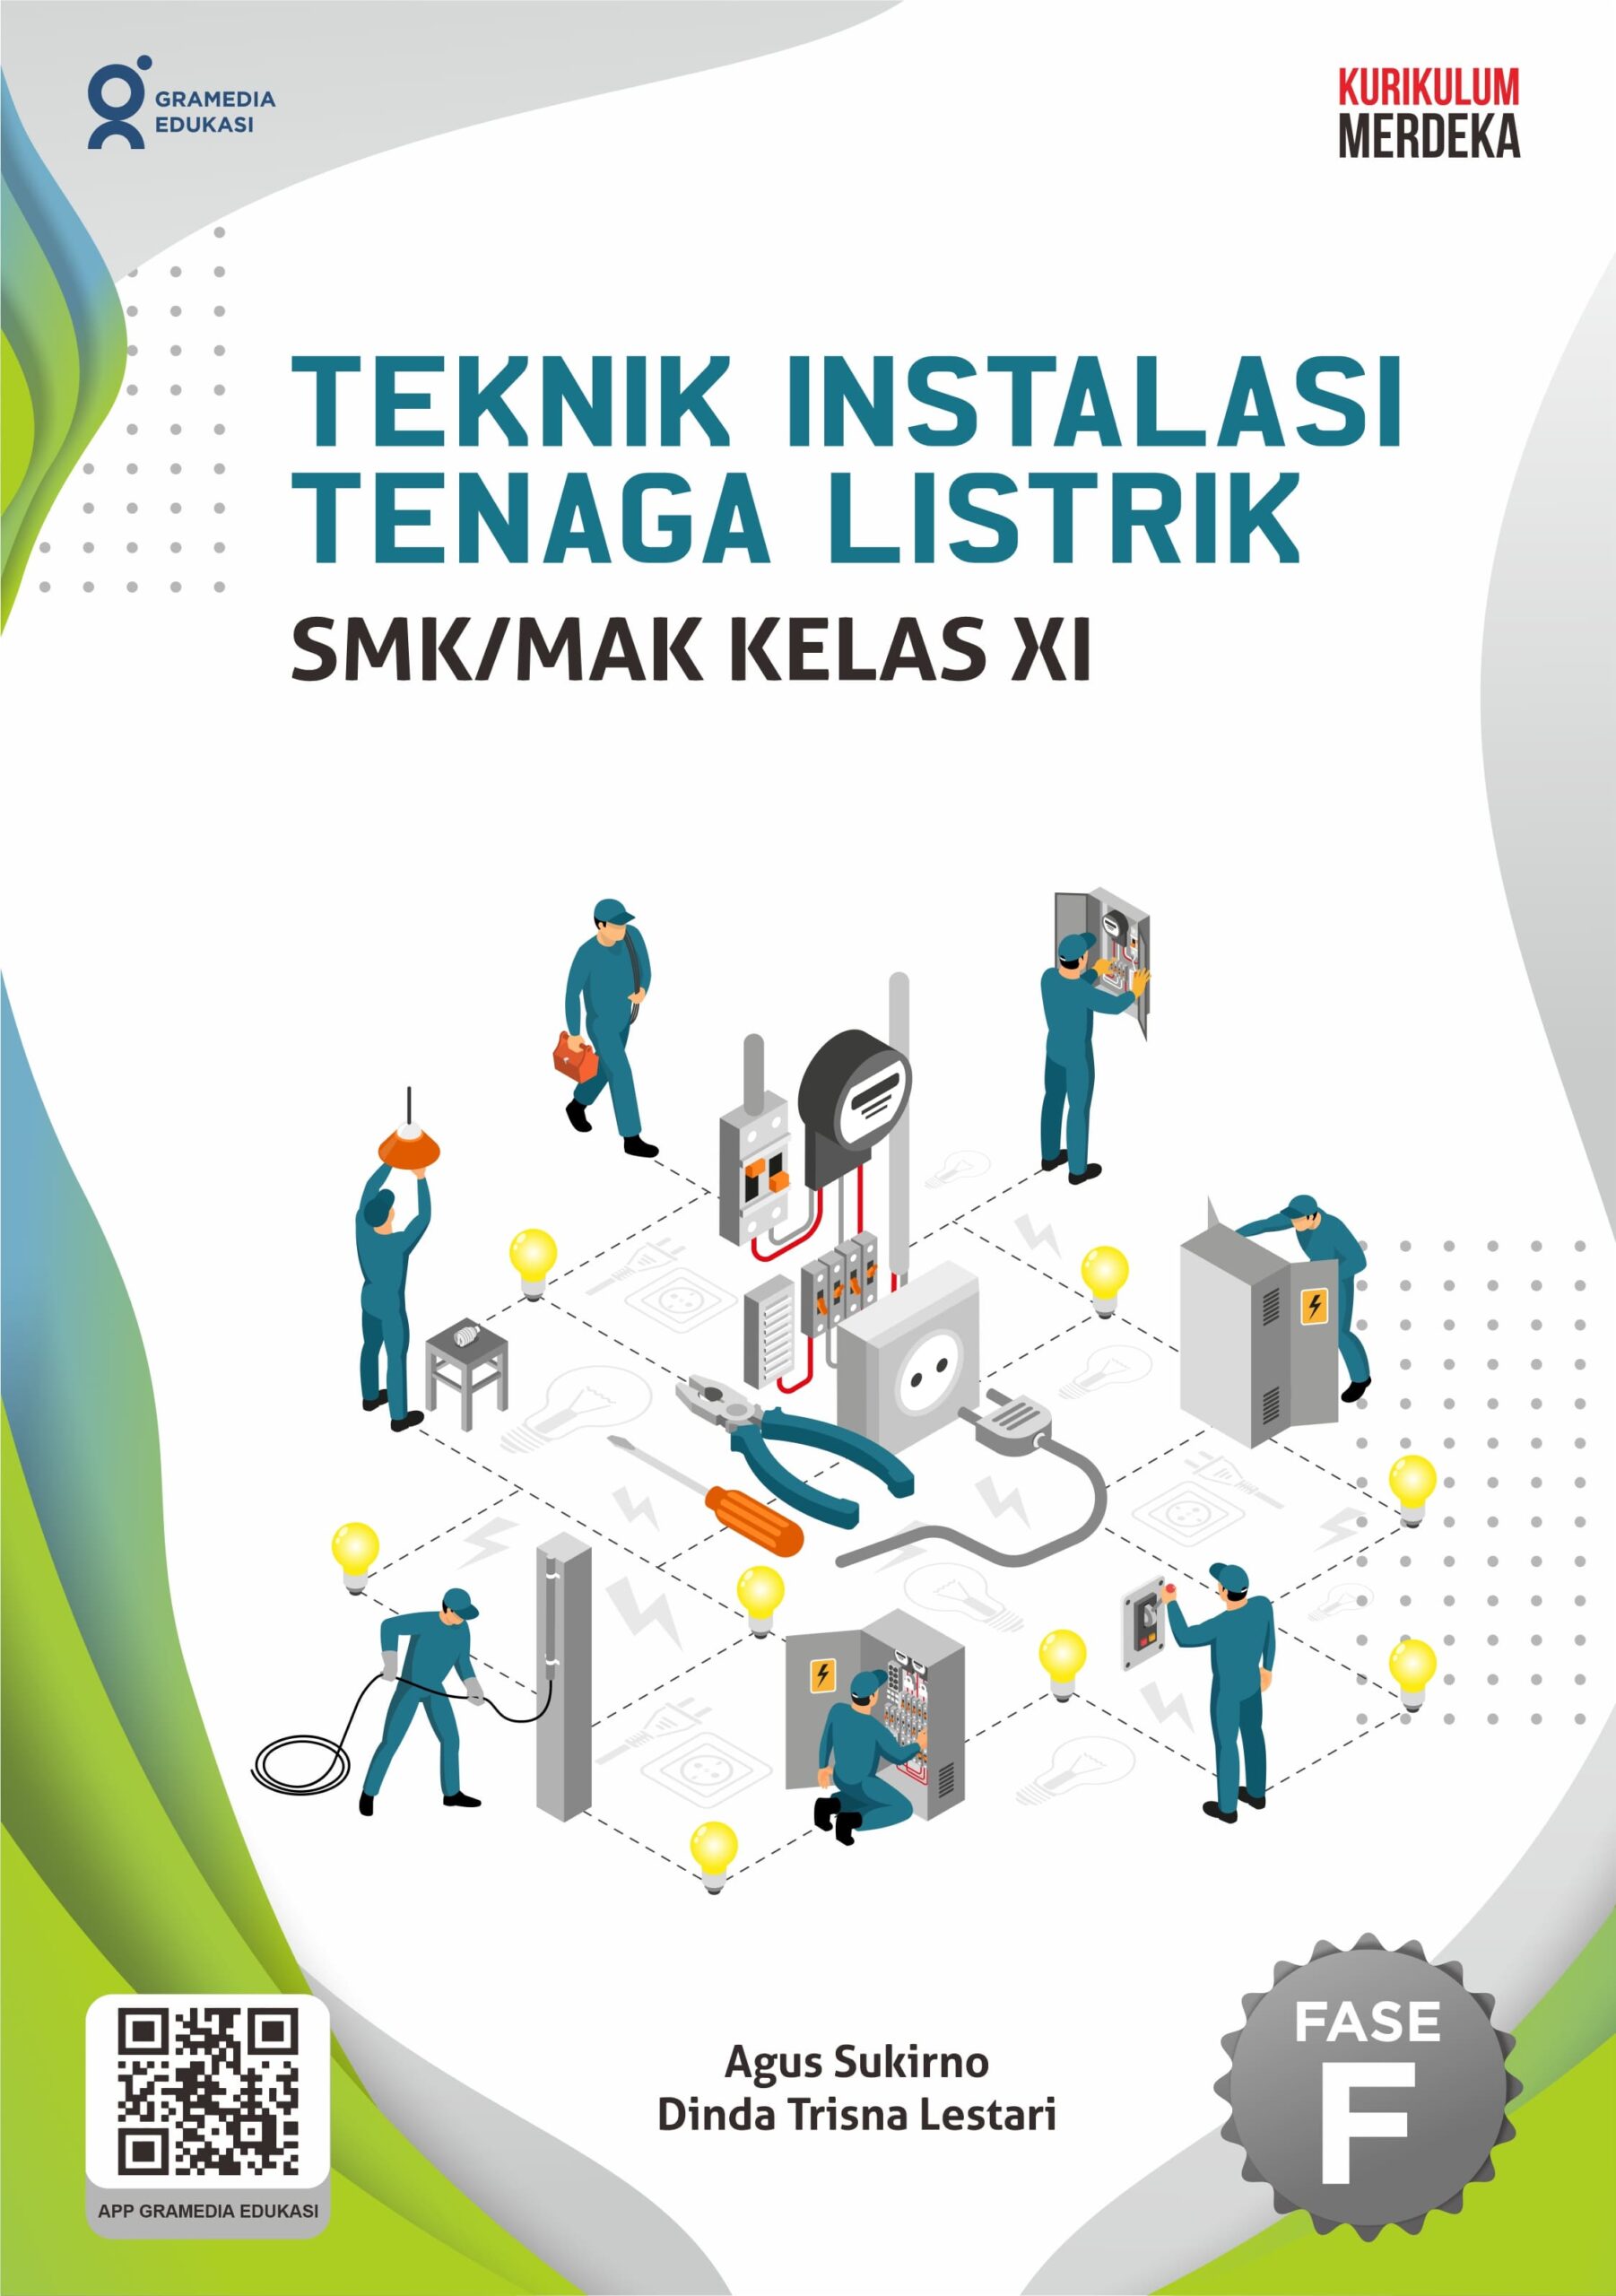 Teknik instalasi tenaga listrik SMK/MAK kelas XI